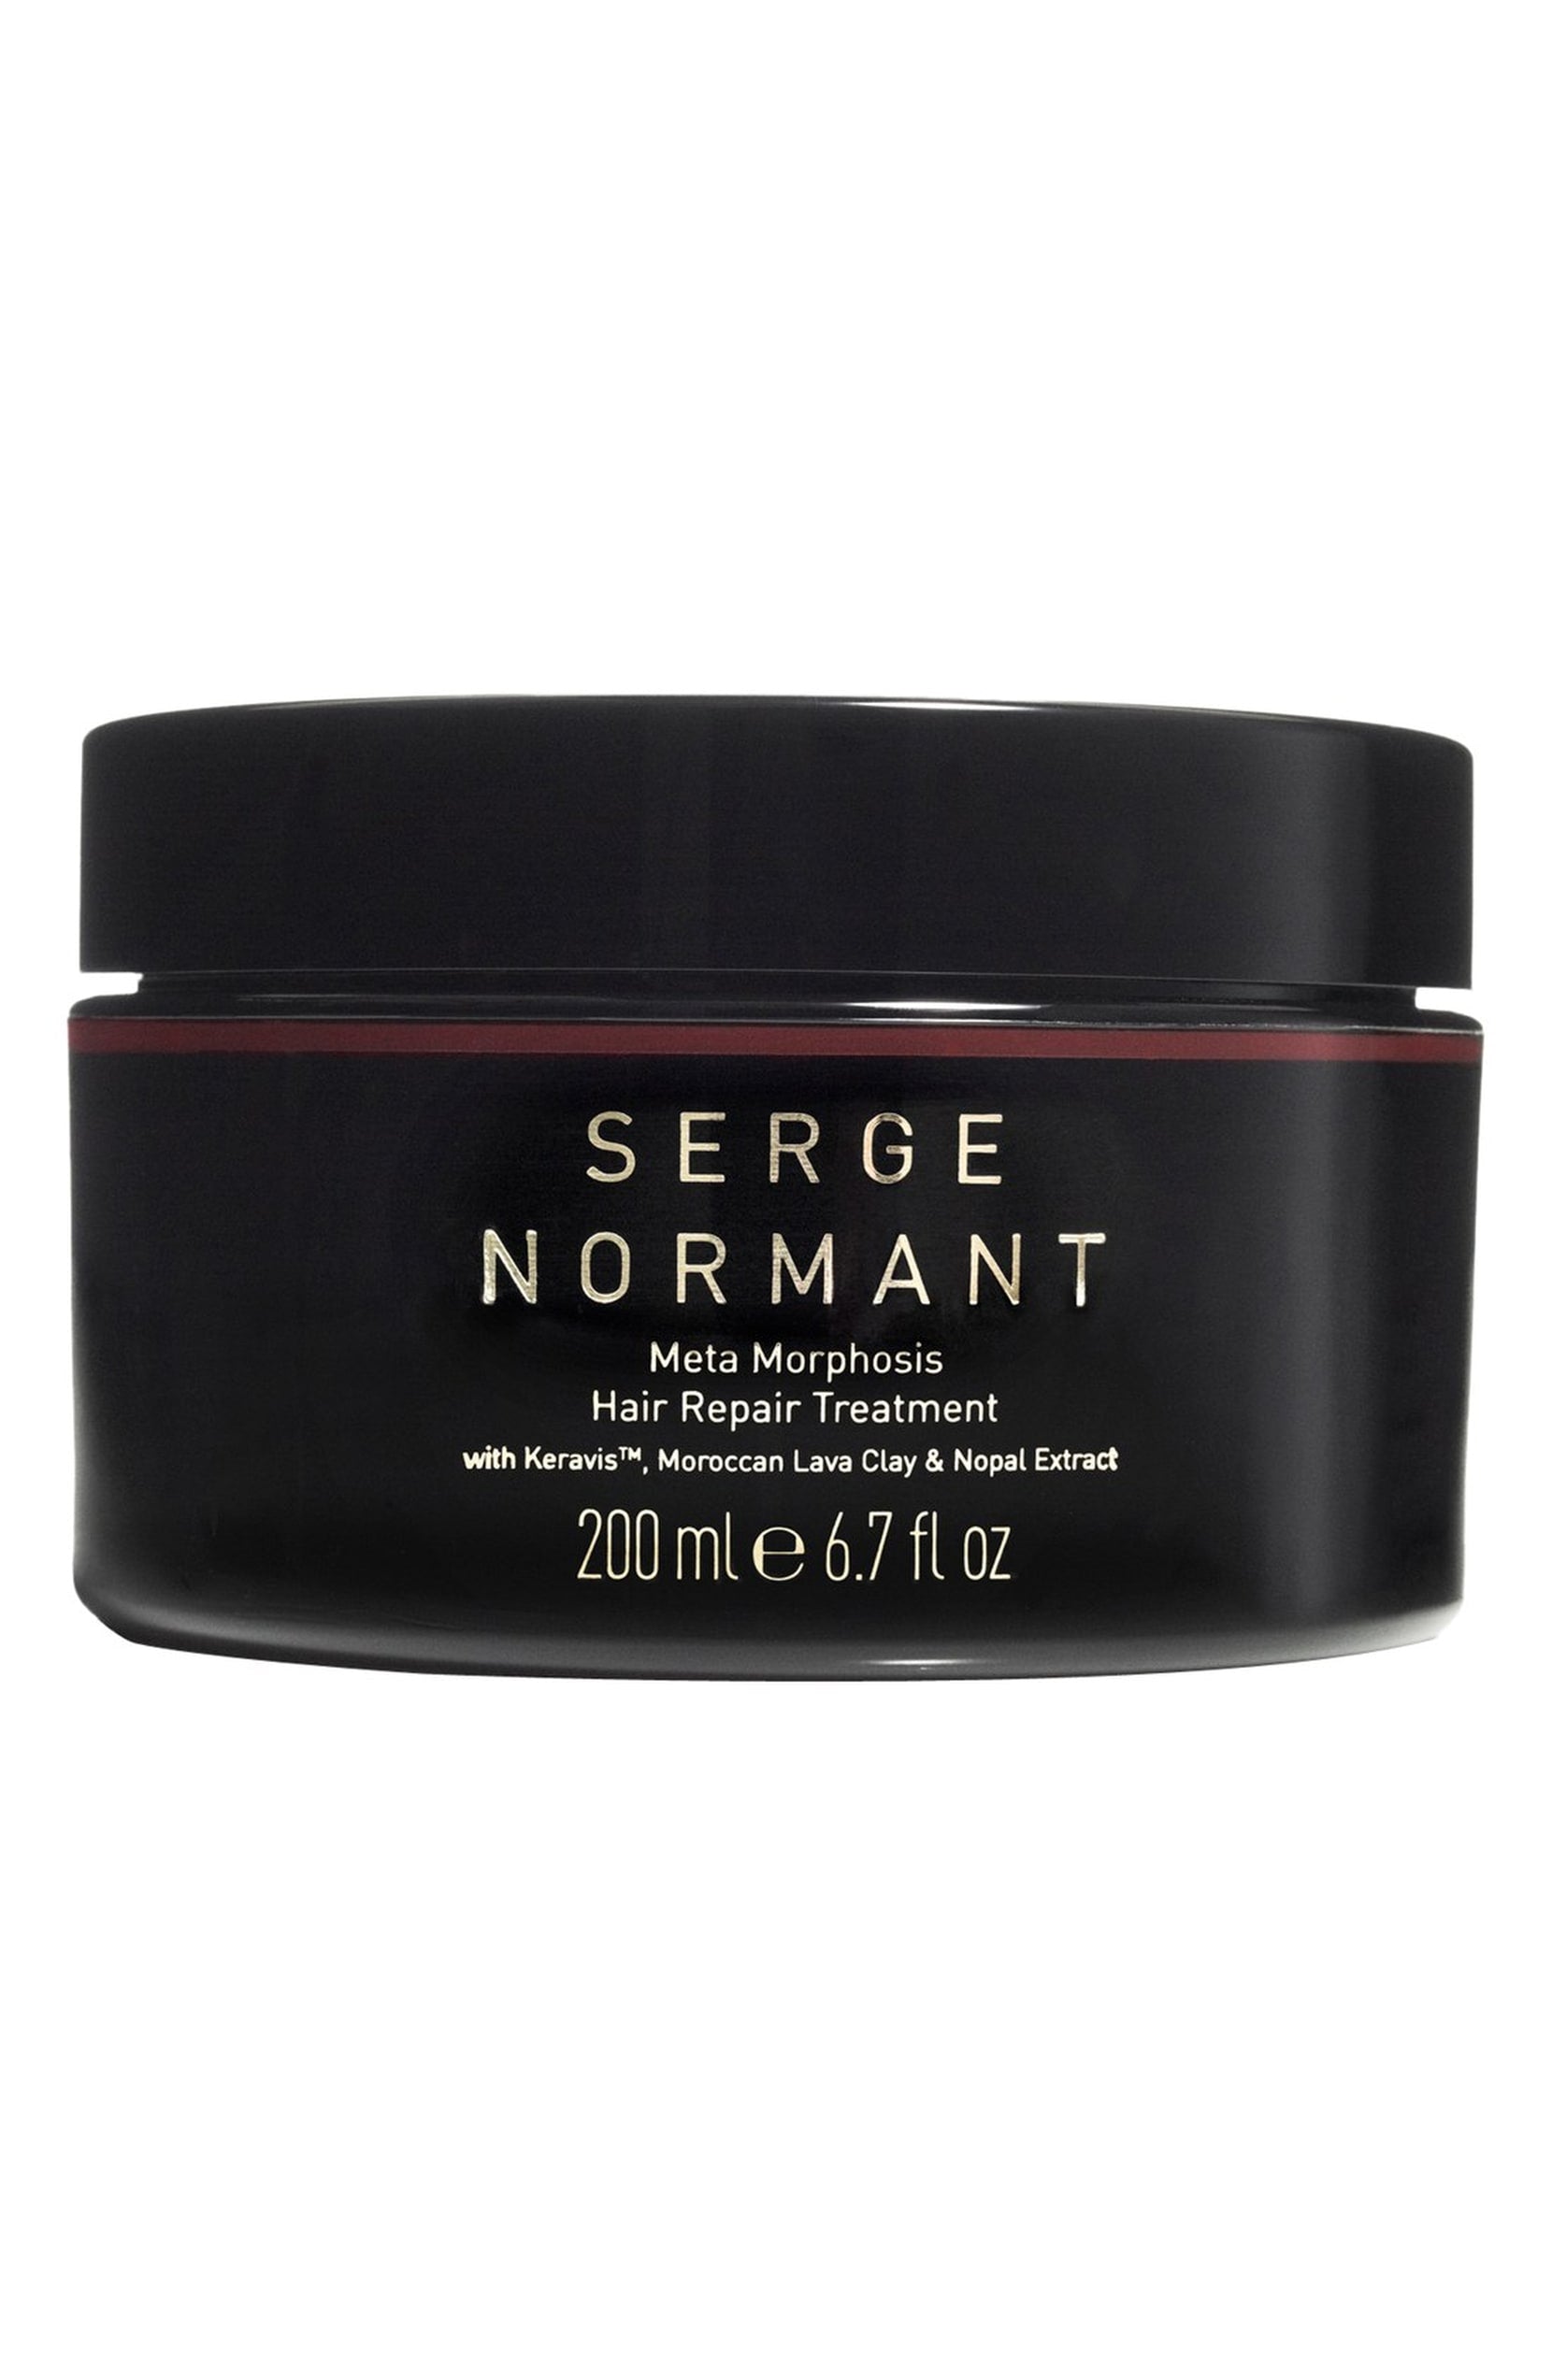 Shop Serge Normant Meta Morphosis Hair Repair Treatment at New London Pharmacy 6.7 fl oz. Free shipping. 